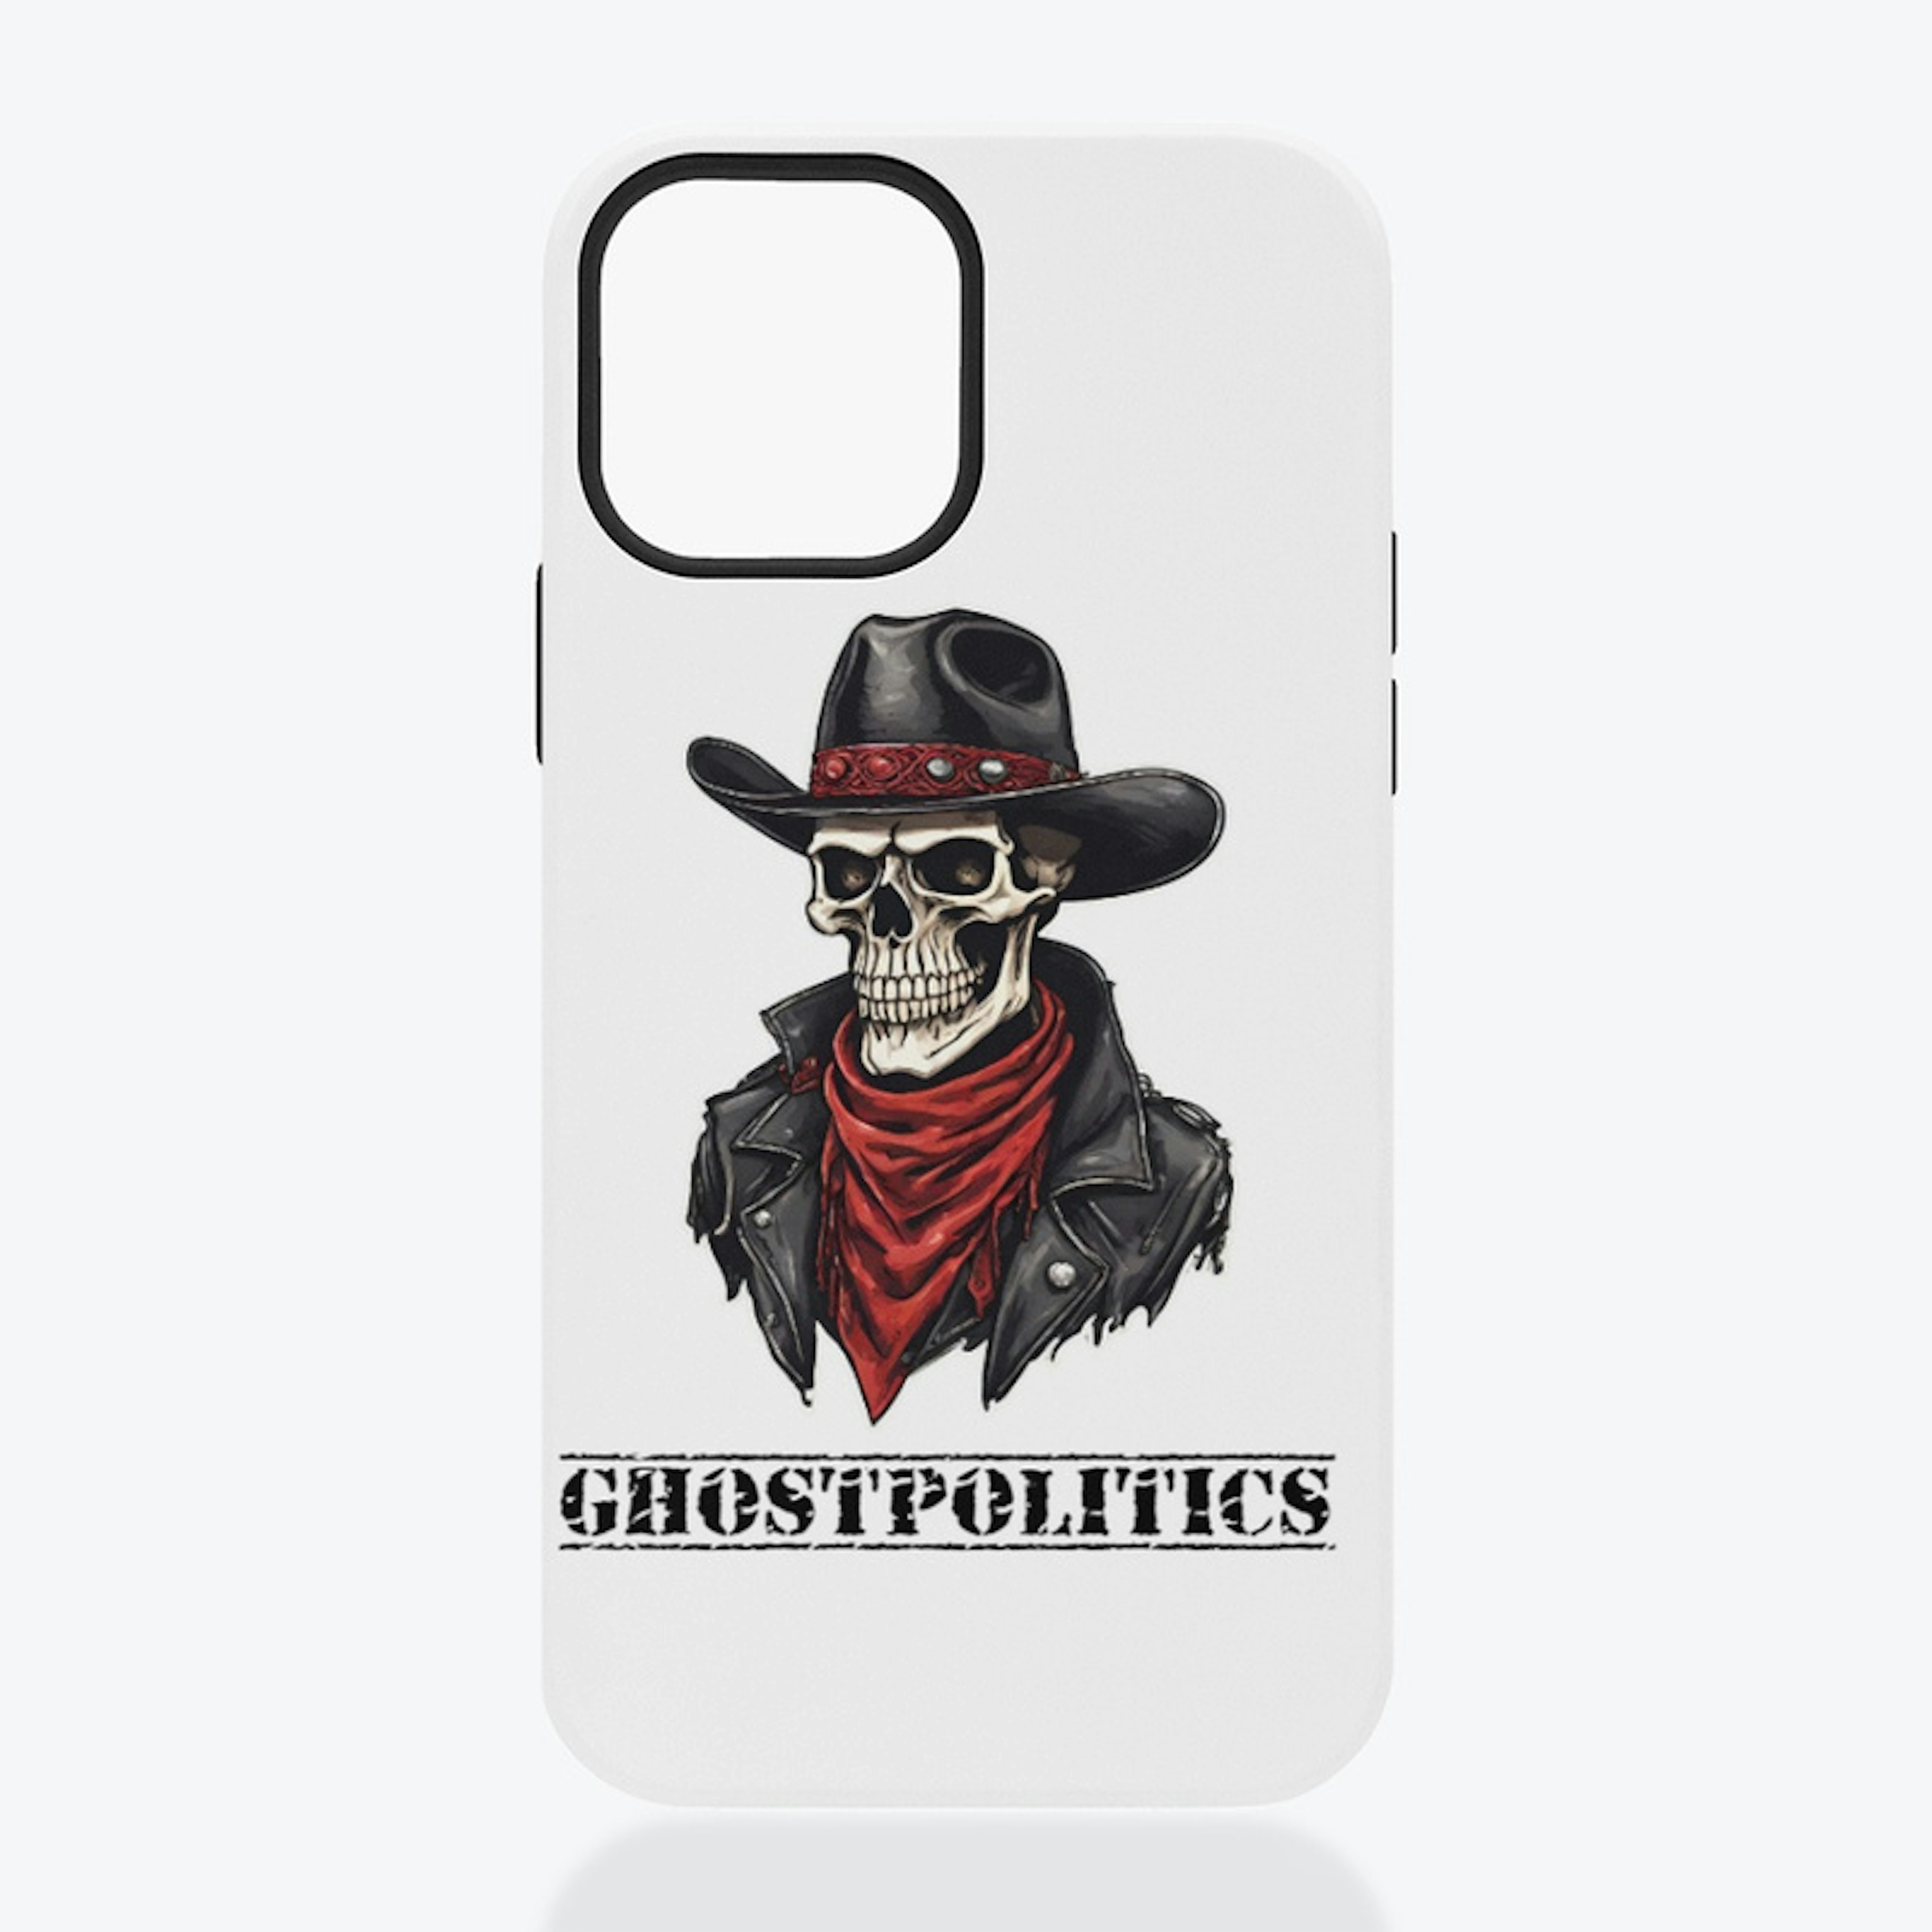 GhostPolitics Swag